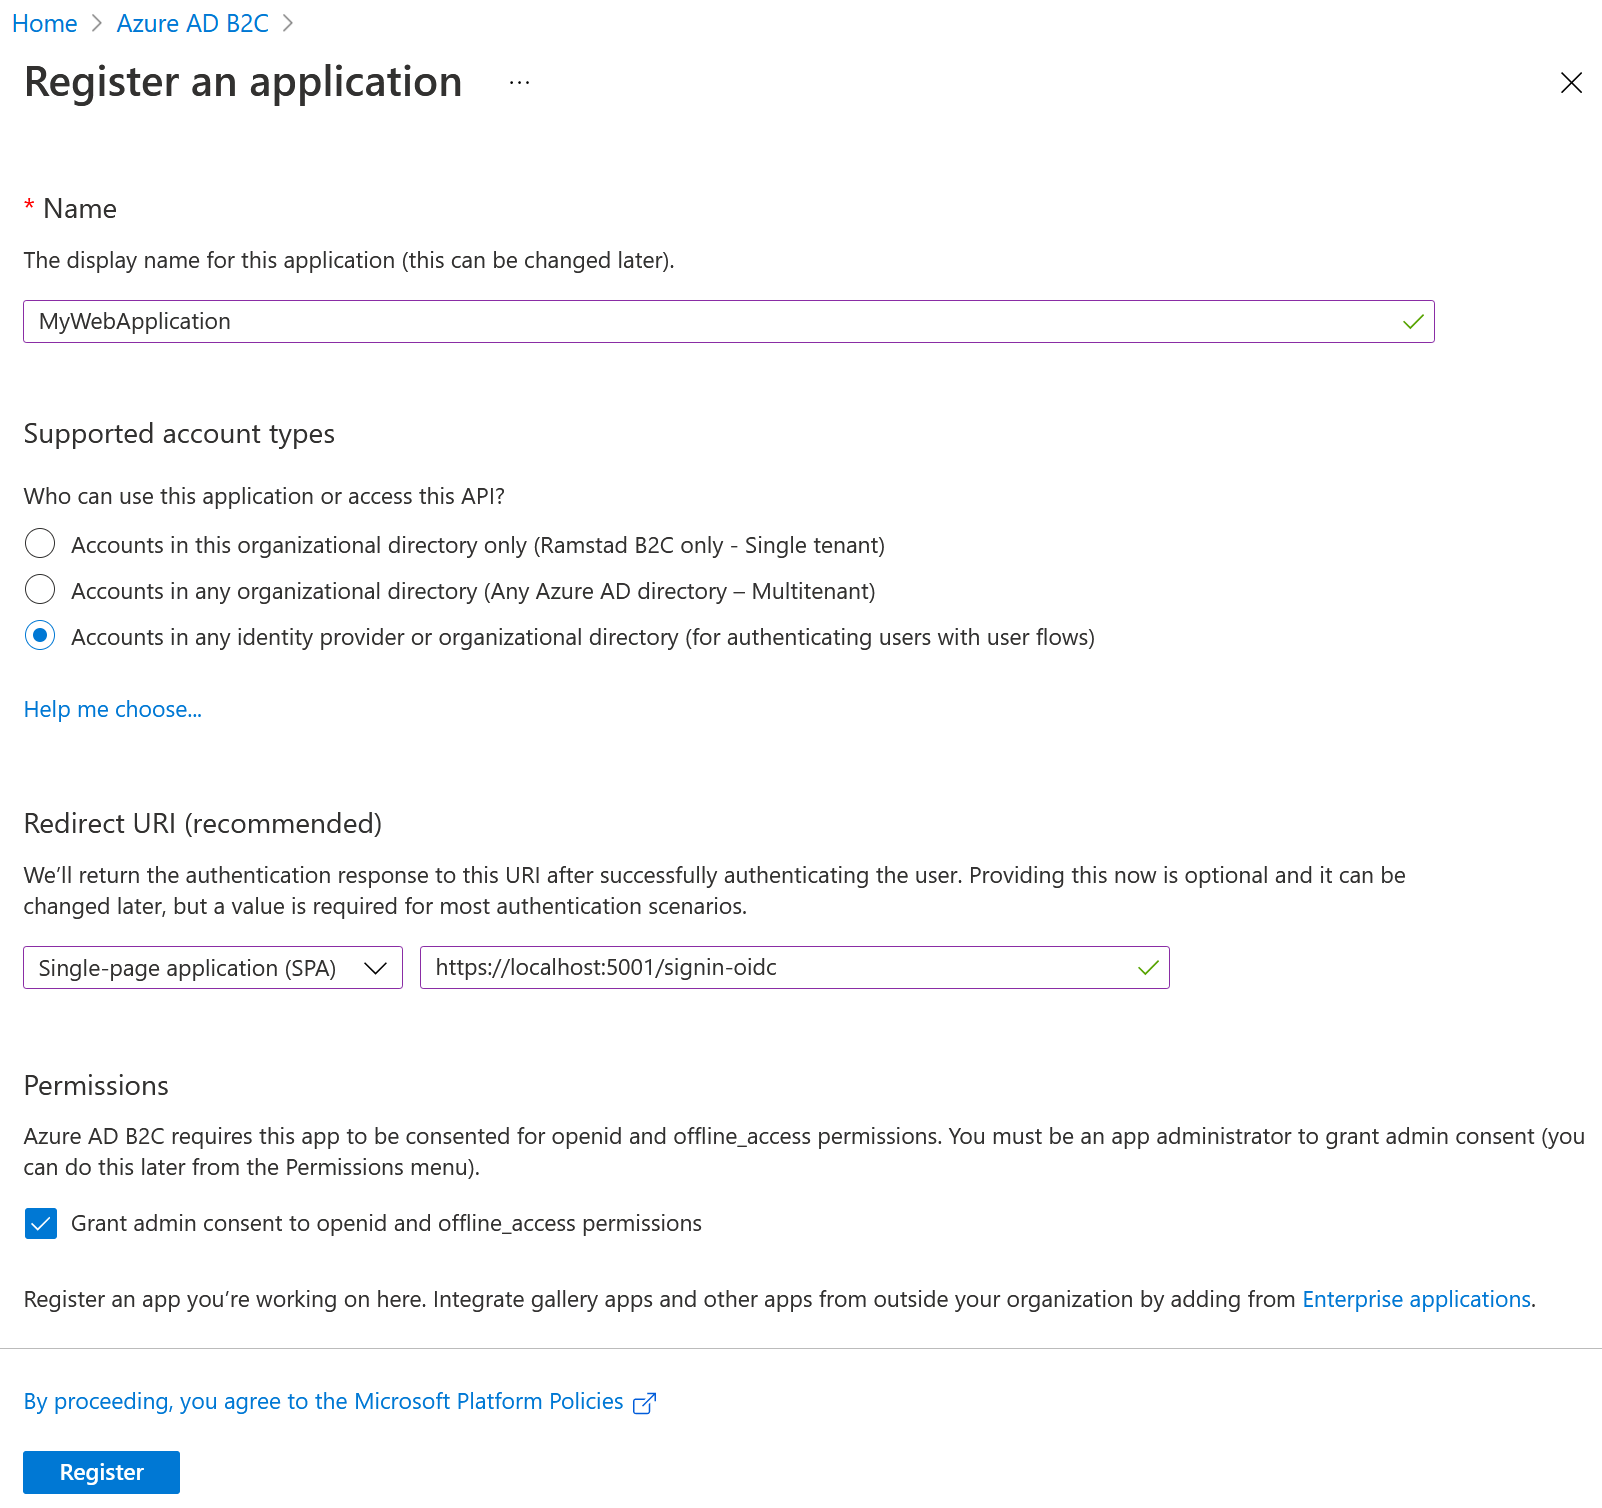 Register a new application